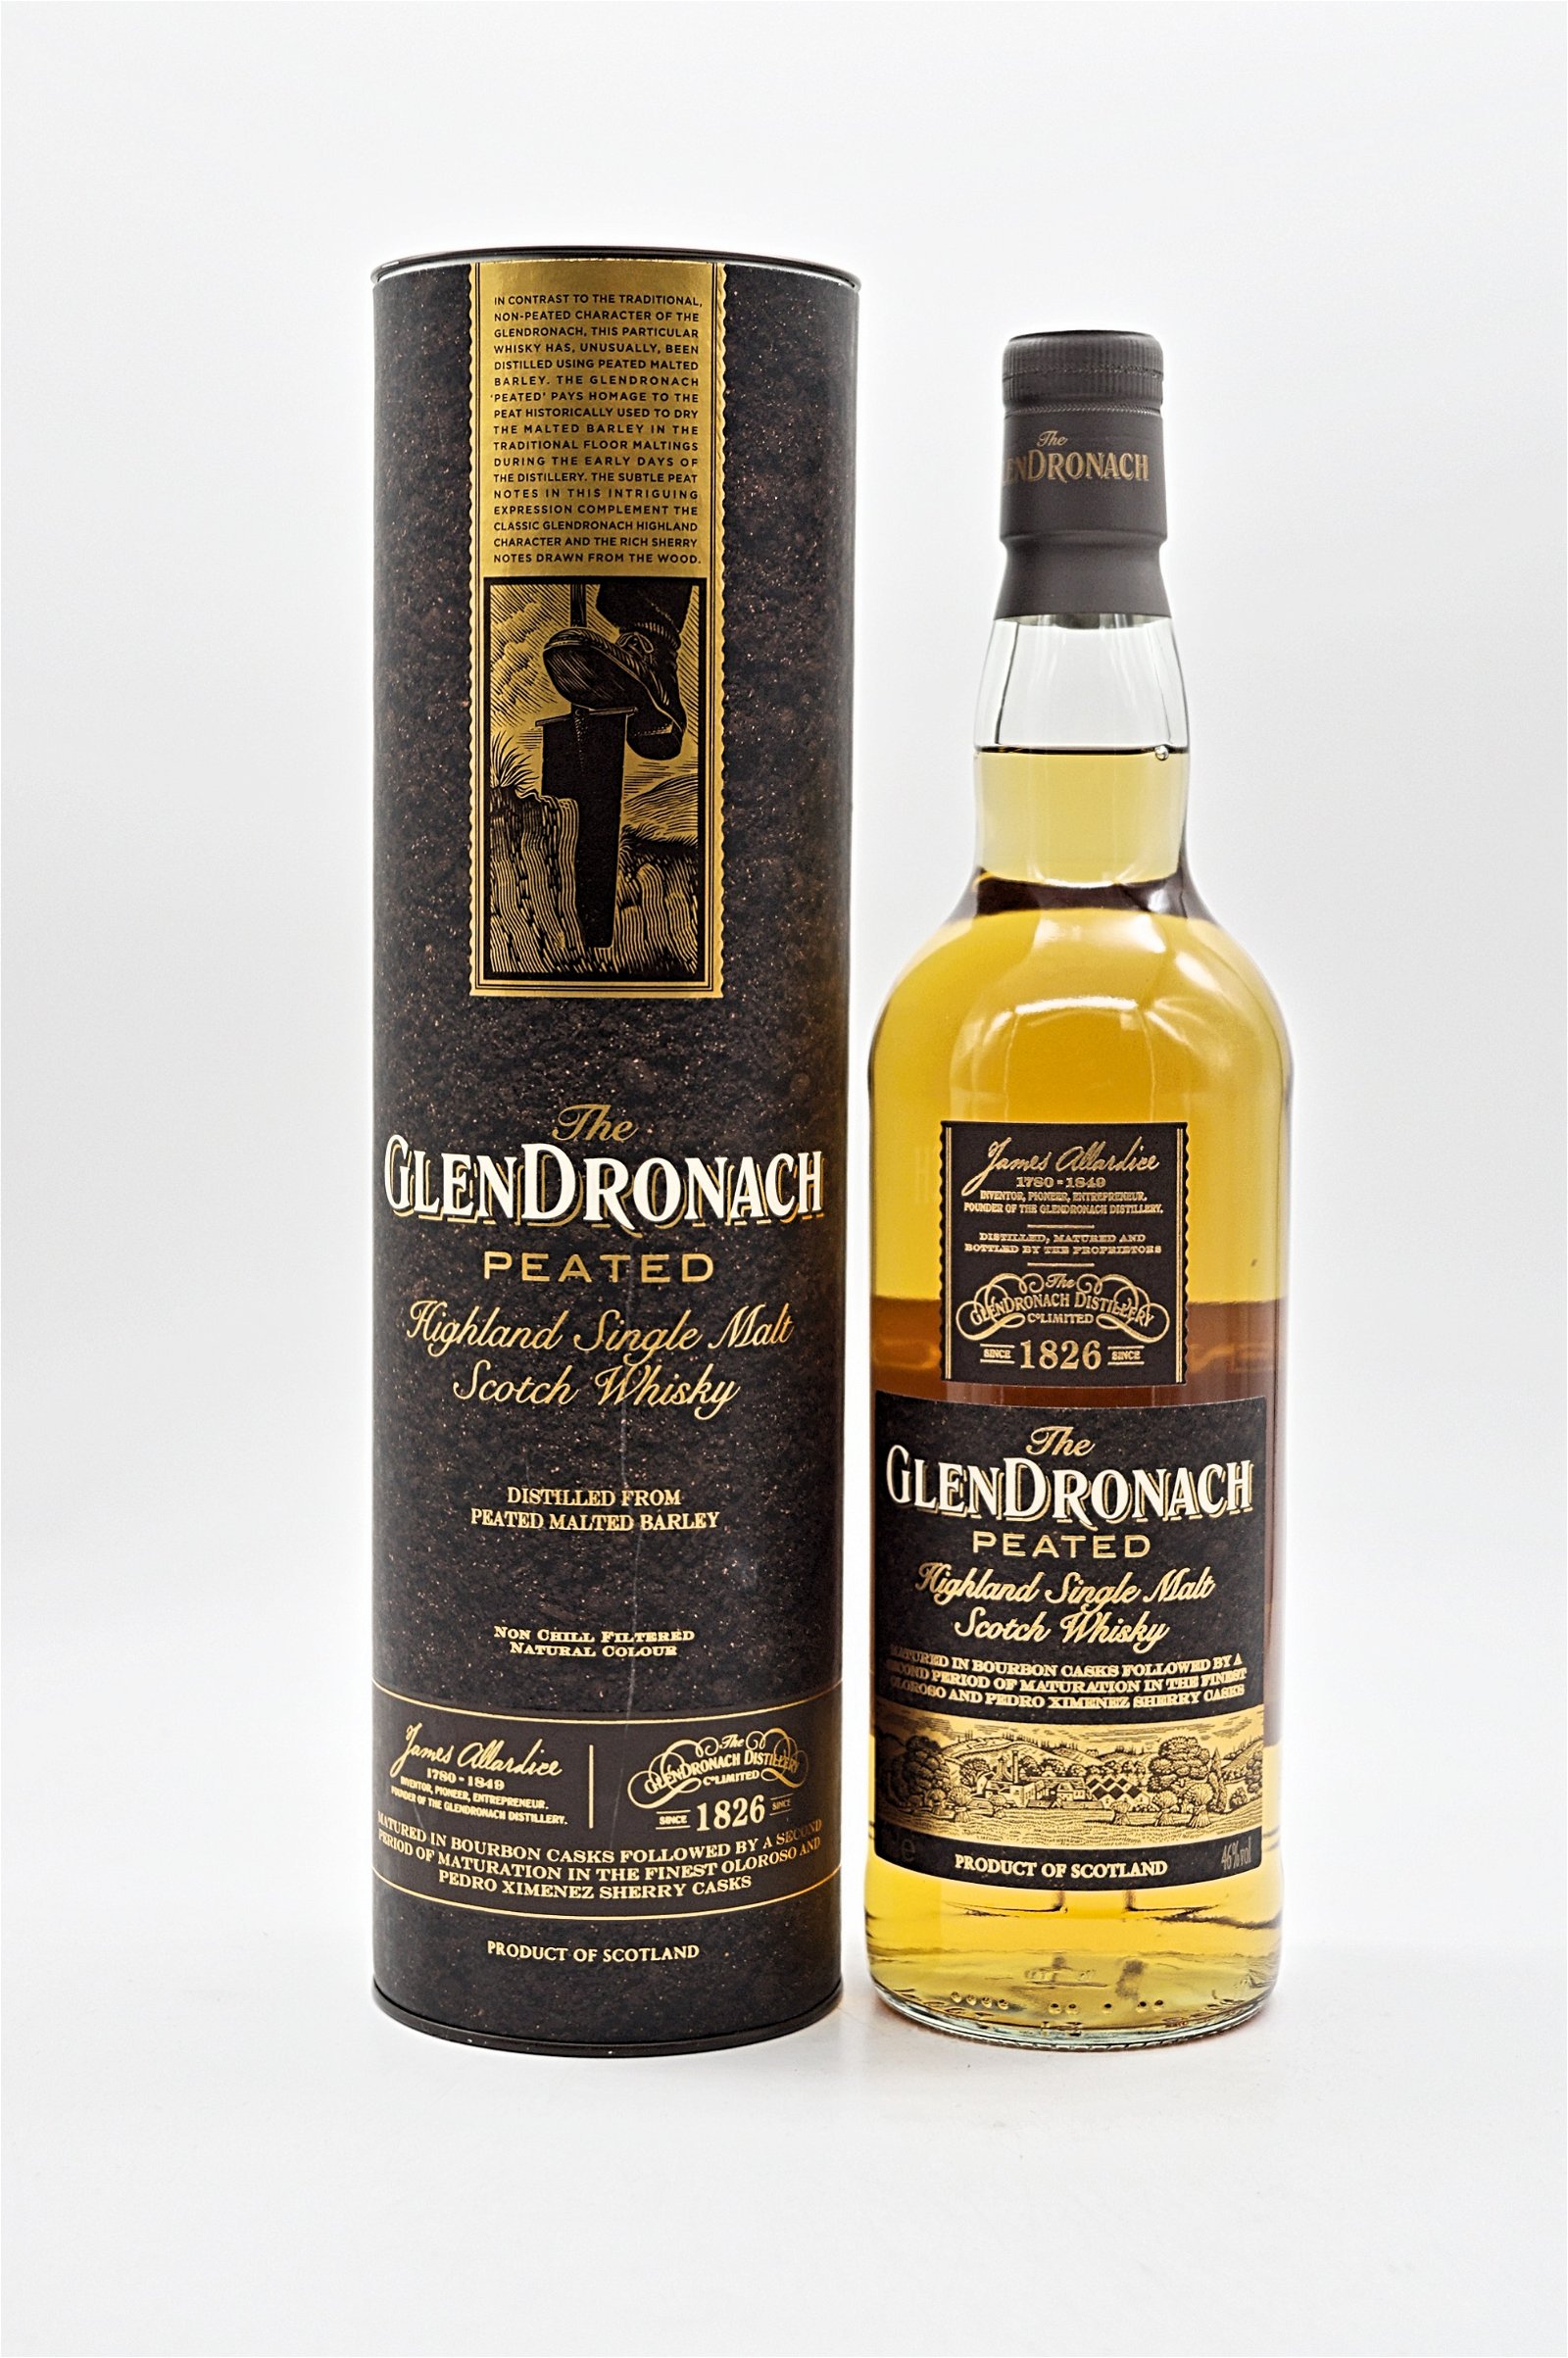 GlenDronach Peated Highland Single Malt Scotch Whisky